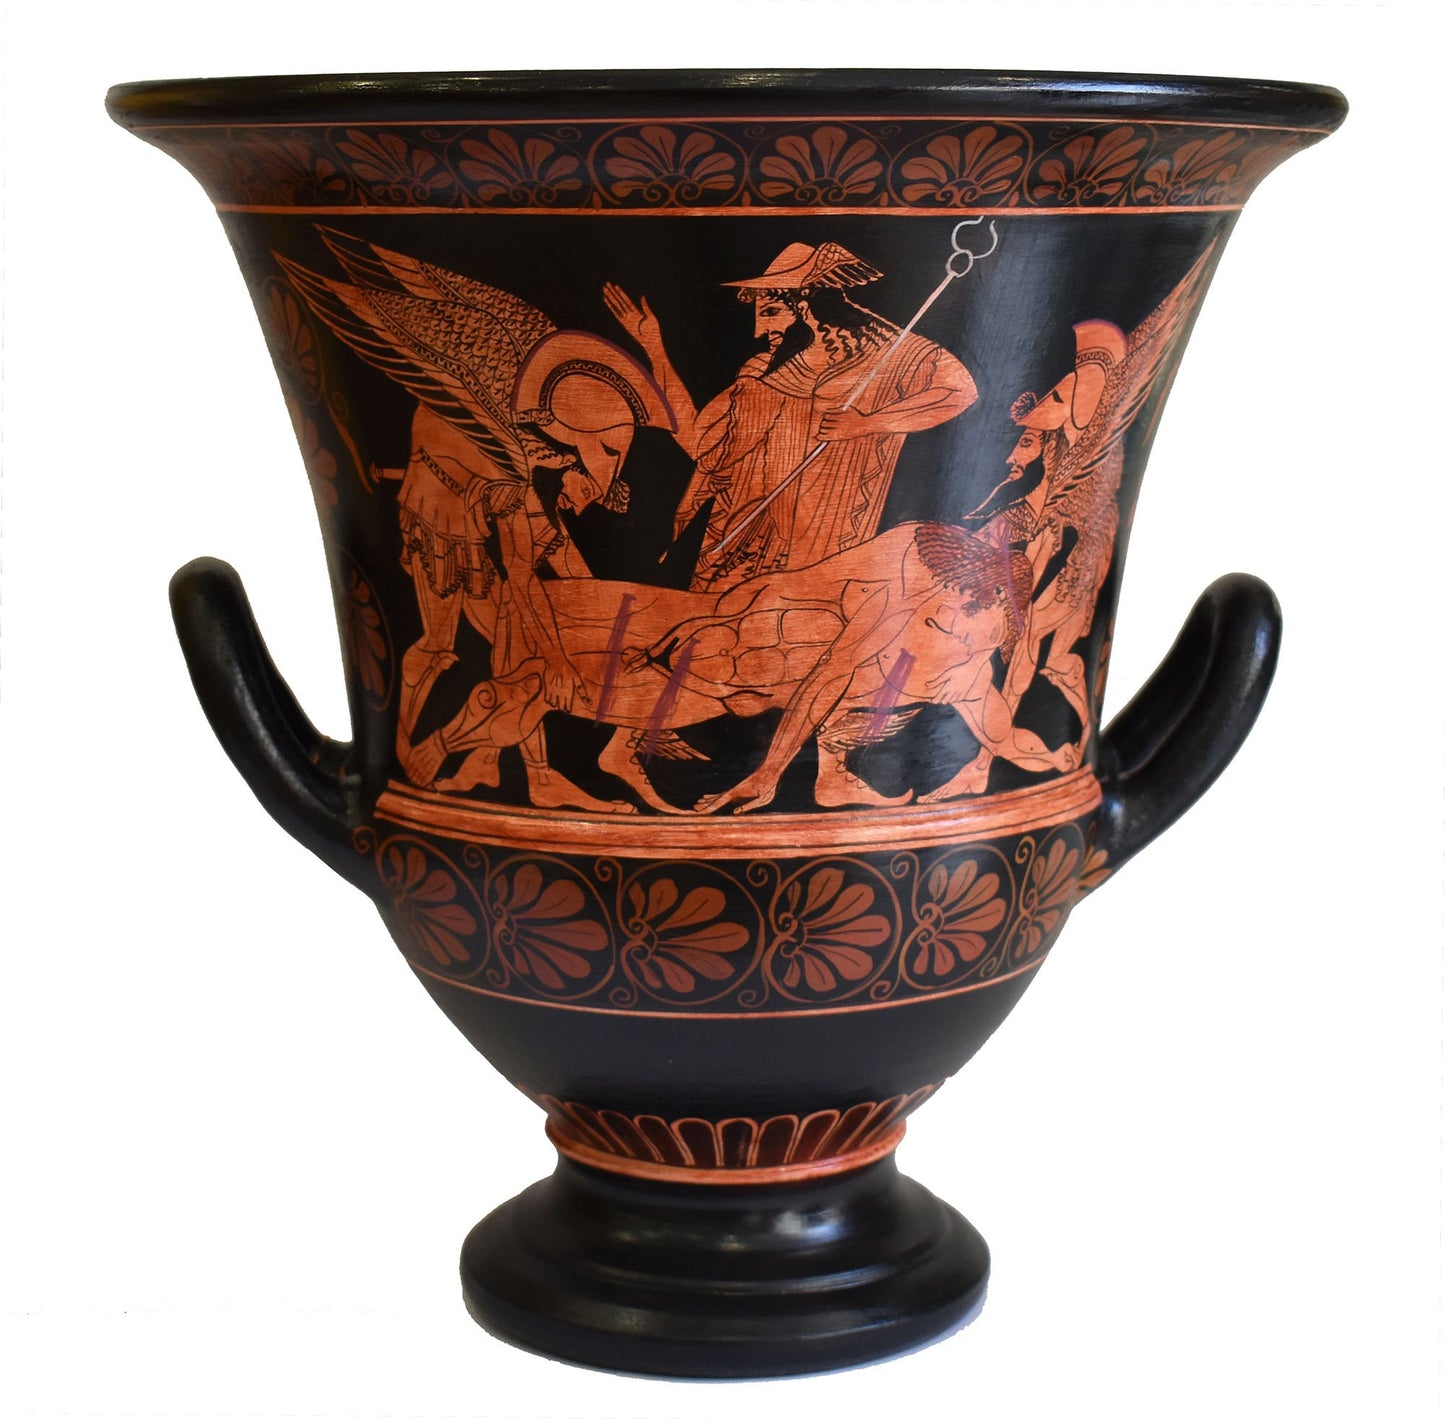 Euphronios or Sarpedon Krater -  515 BC - Metropolitan Museum of Art - Trojan War and Athenian youths Themes - Reproduction